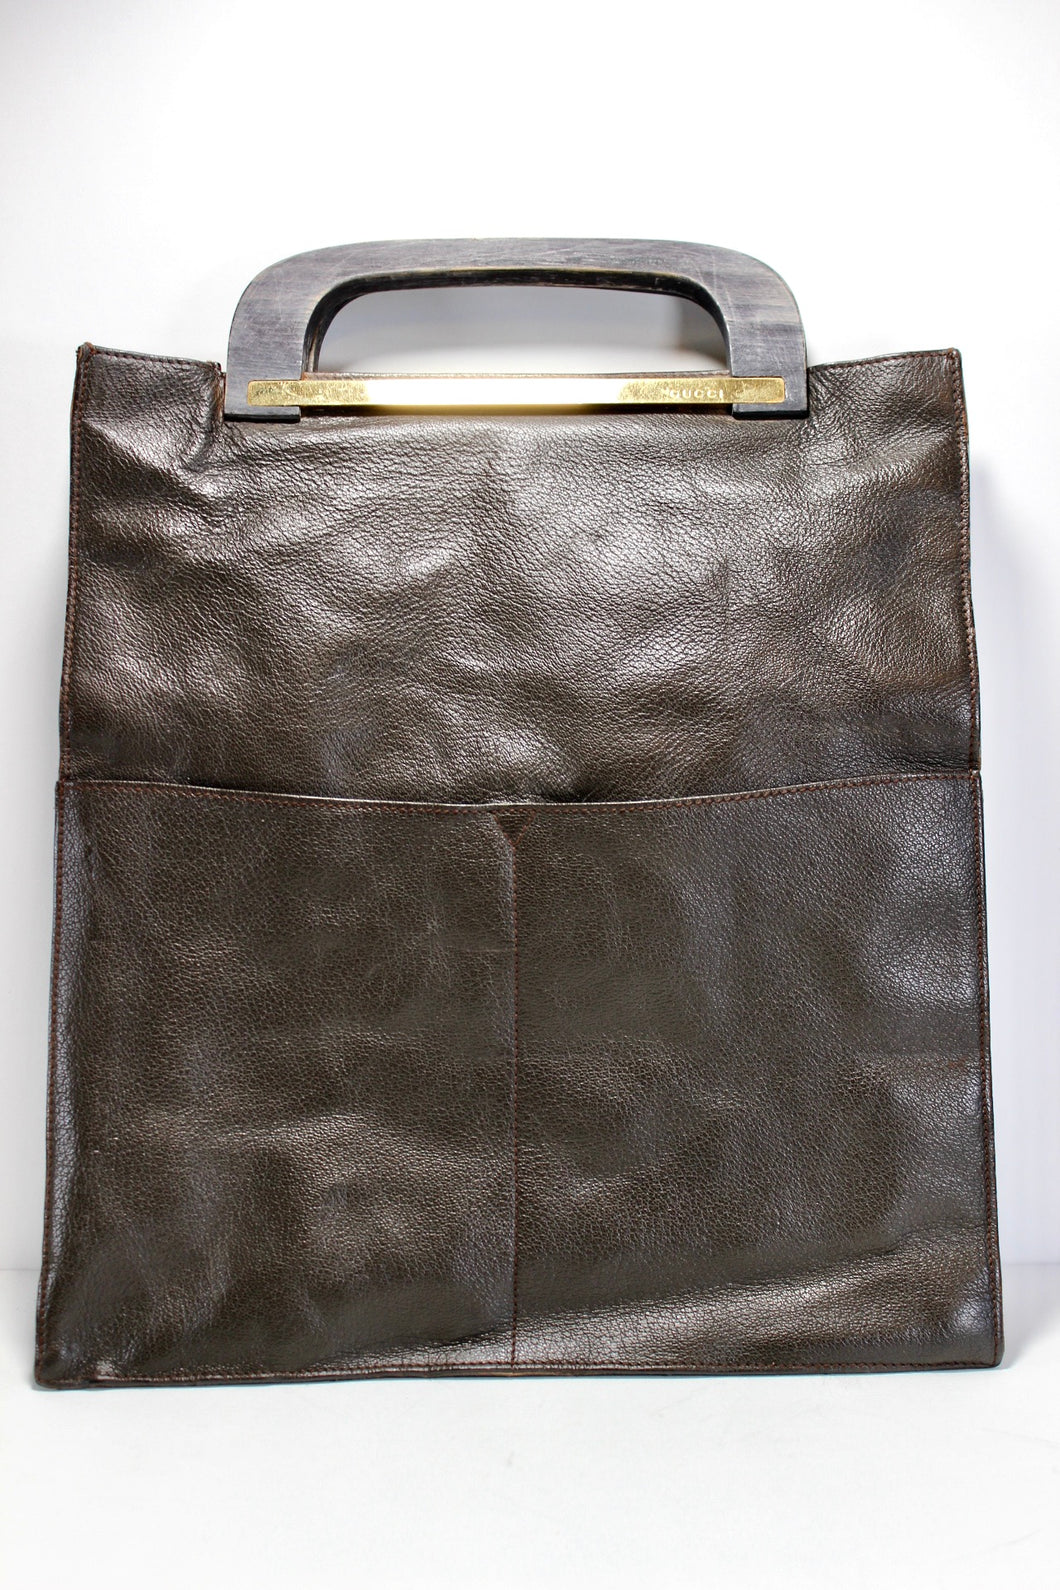 Vintage GUCCI Black Leather Tote Laptop Office Handbag Wood Handle Italy